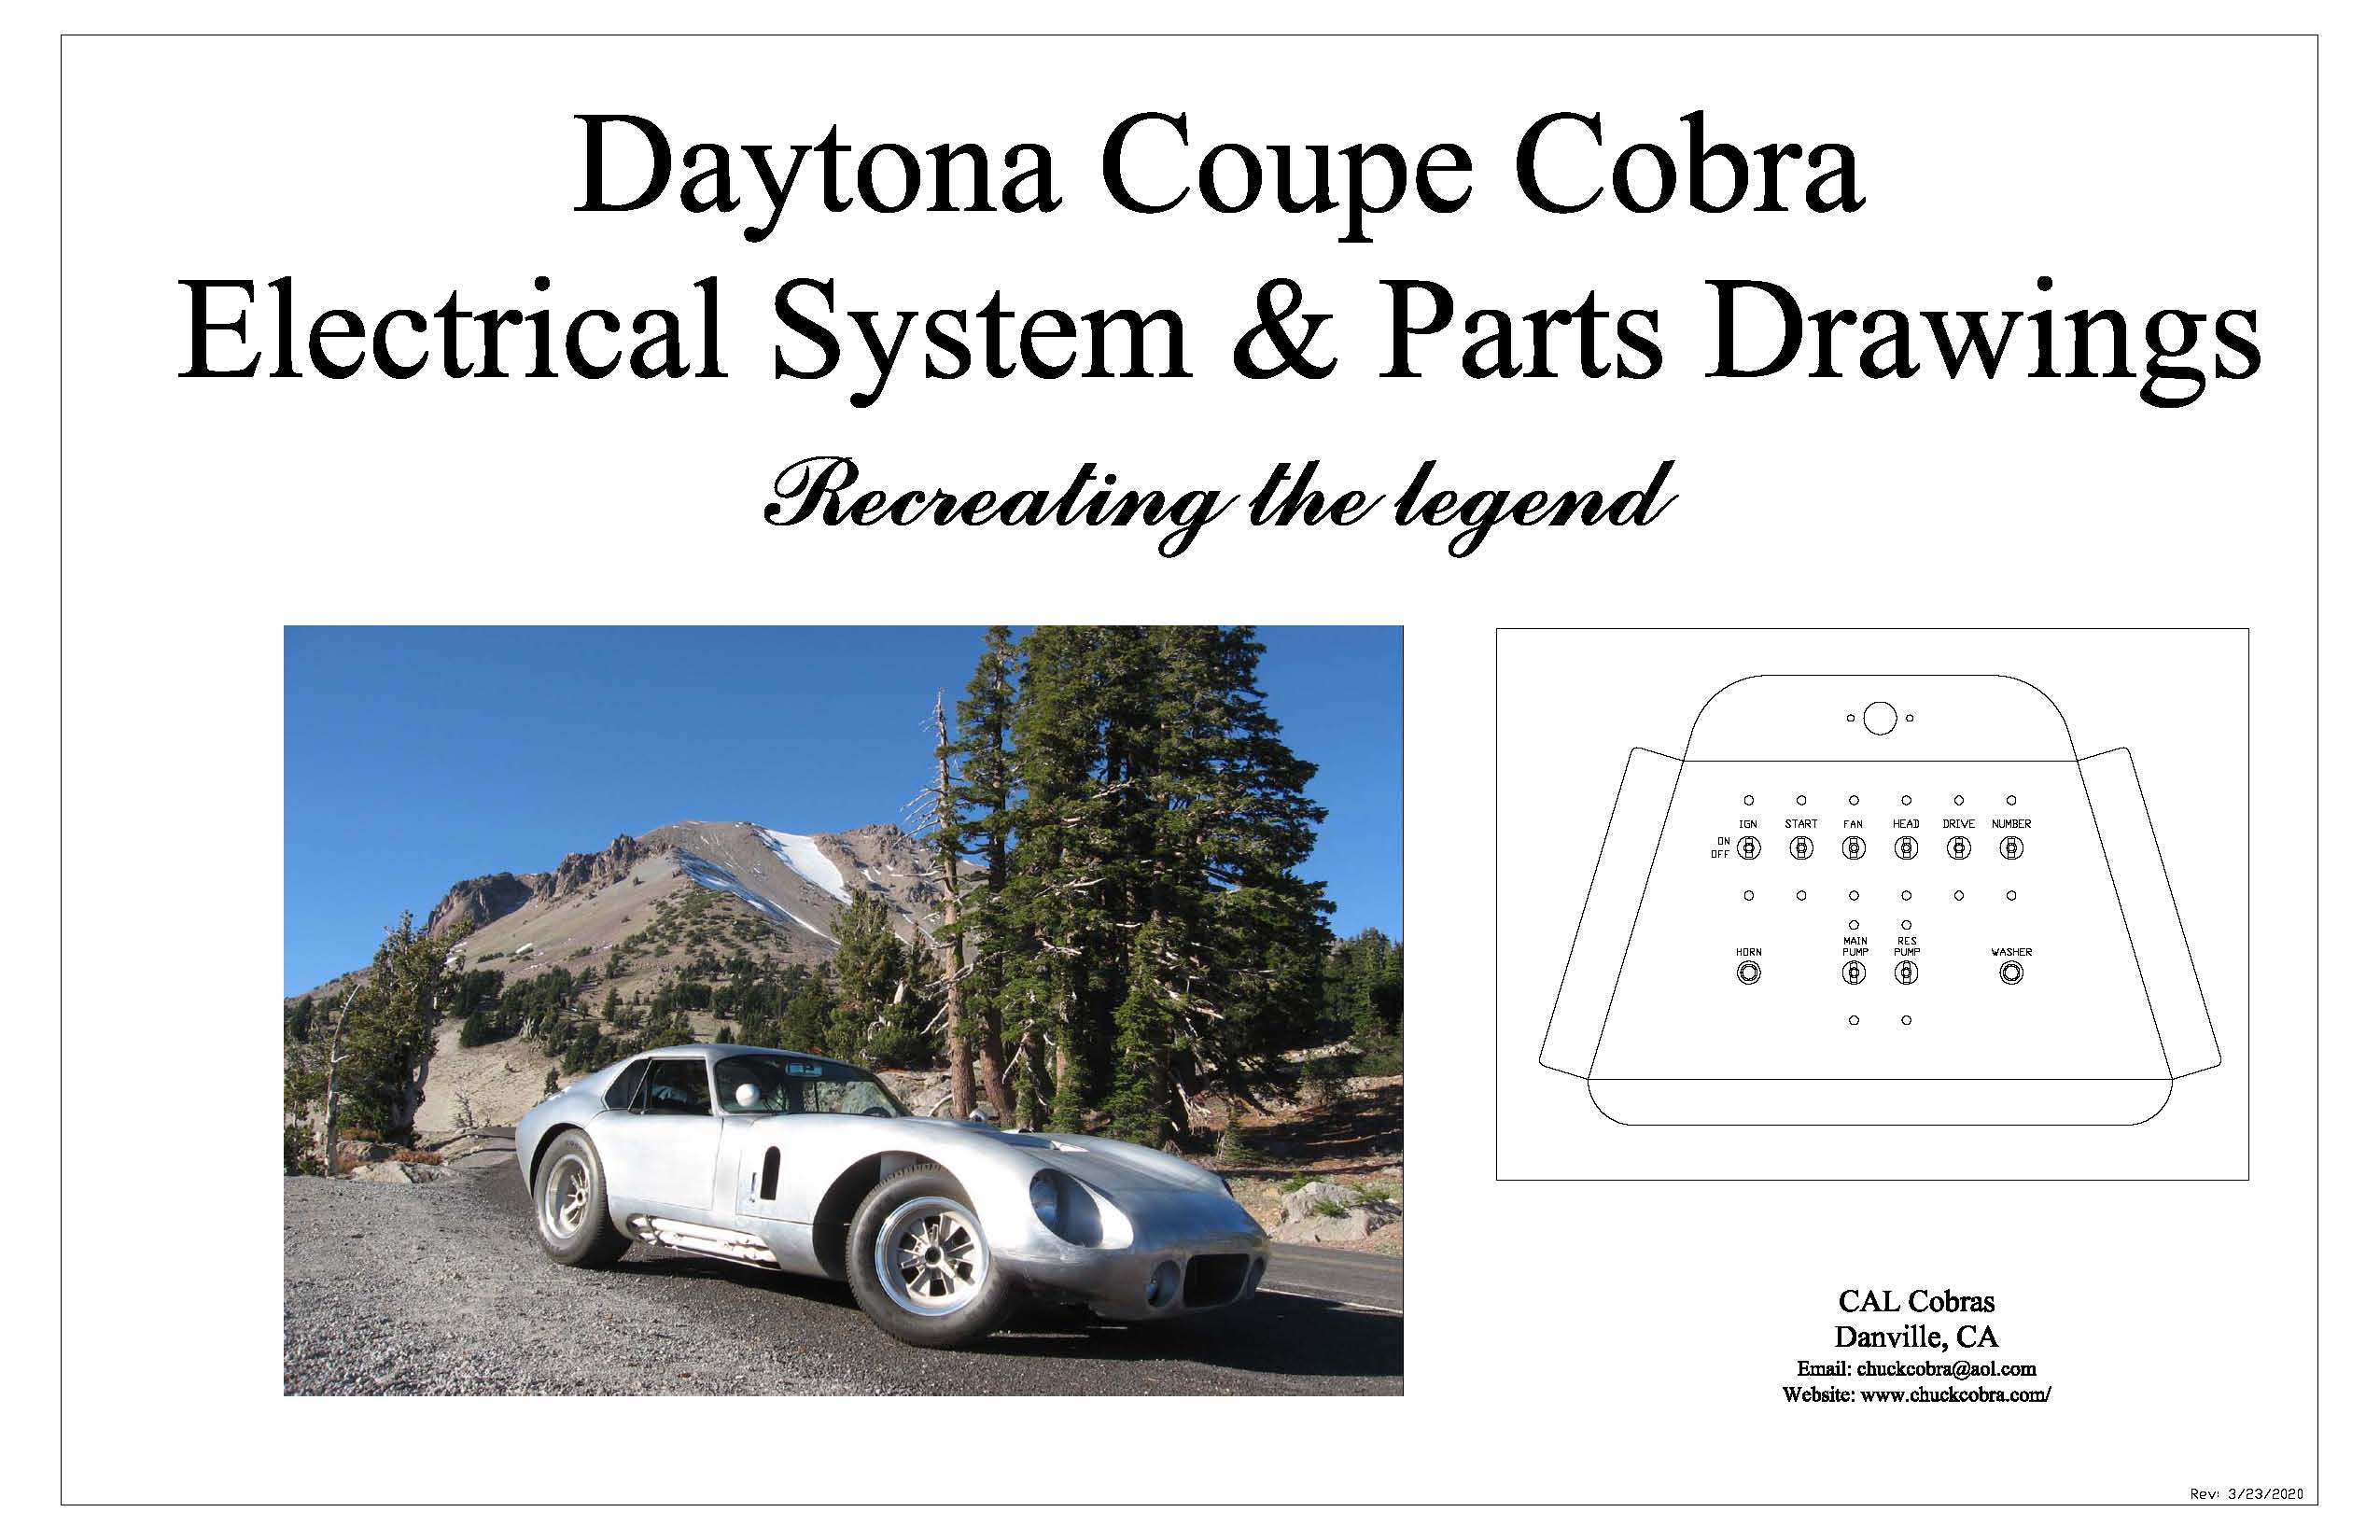 Daytona coupe cobra electrical drawings